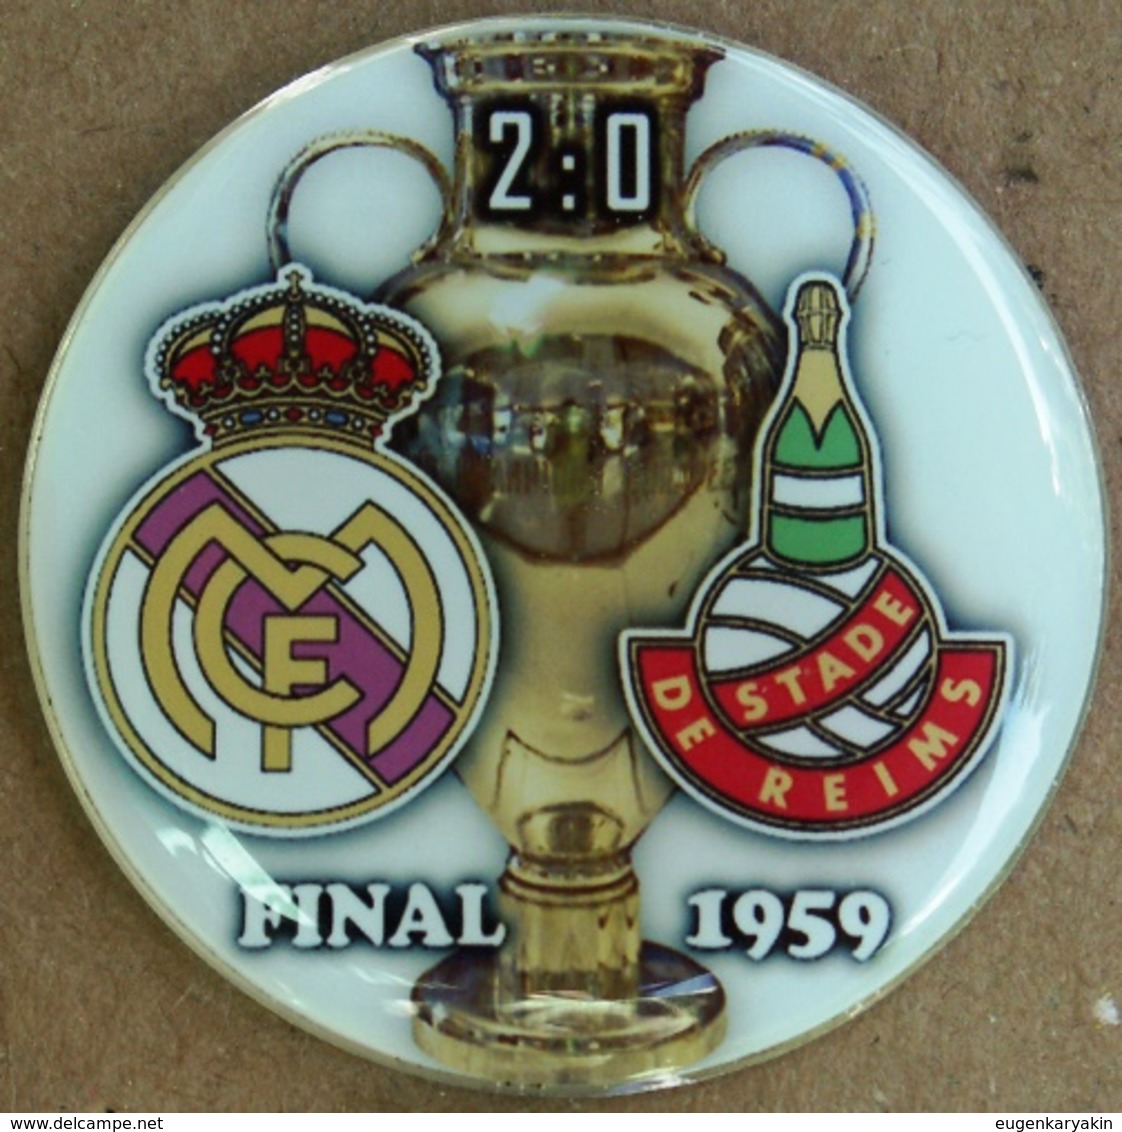 Pin Champions League UEFA Final 1959 Real Madrid Vs Stad De Reims - Calcio